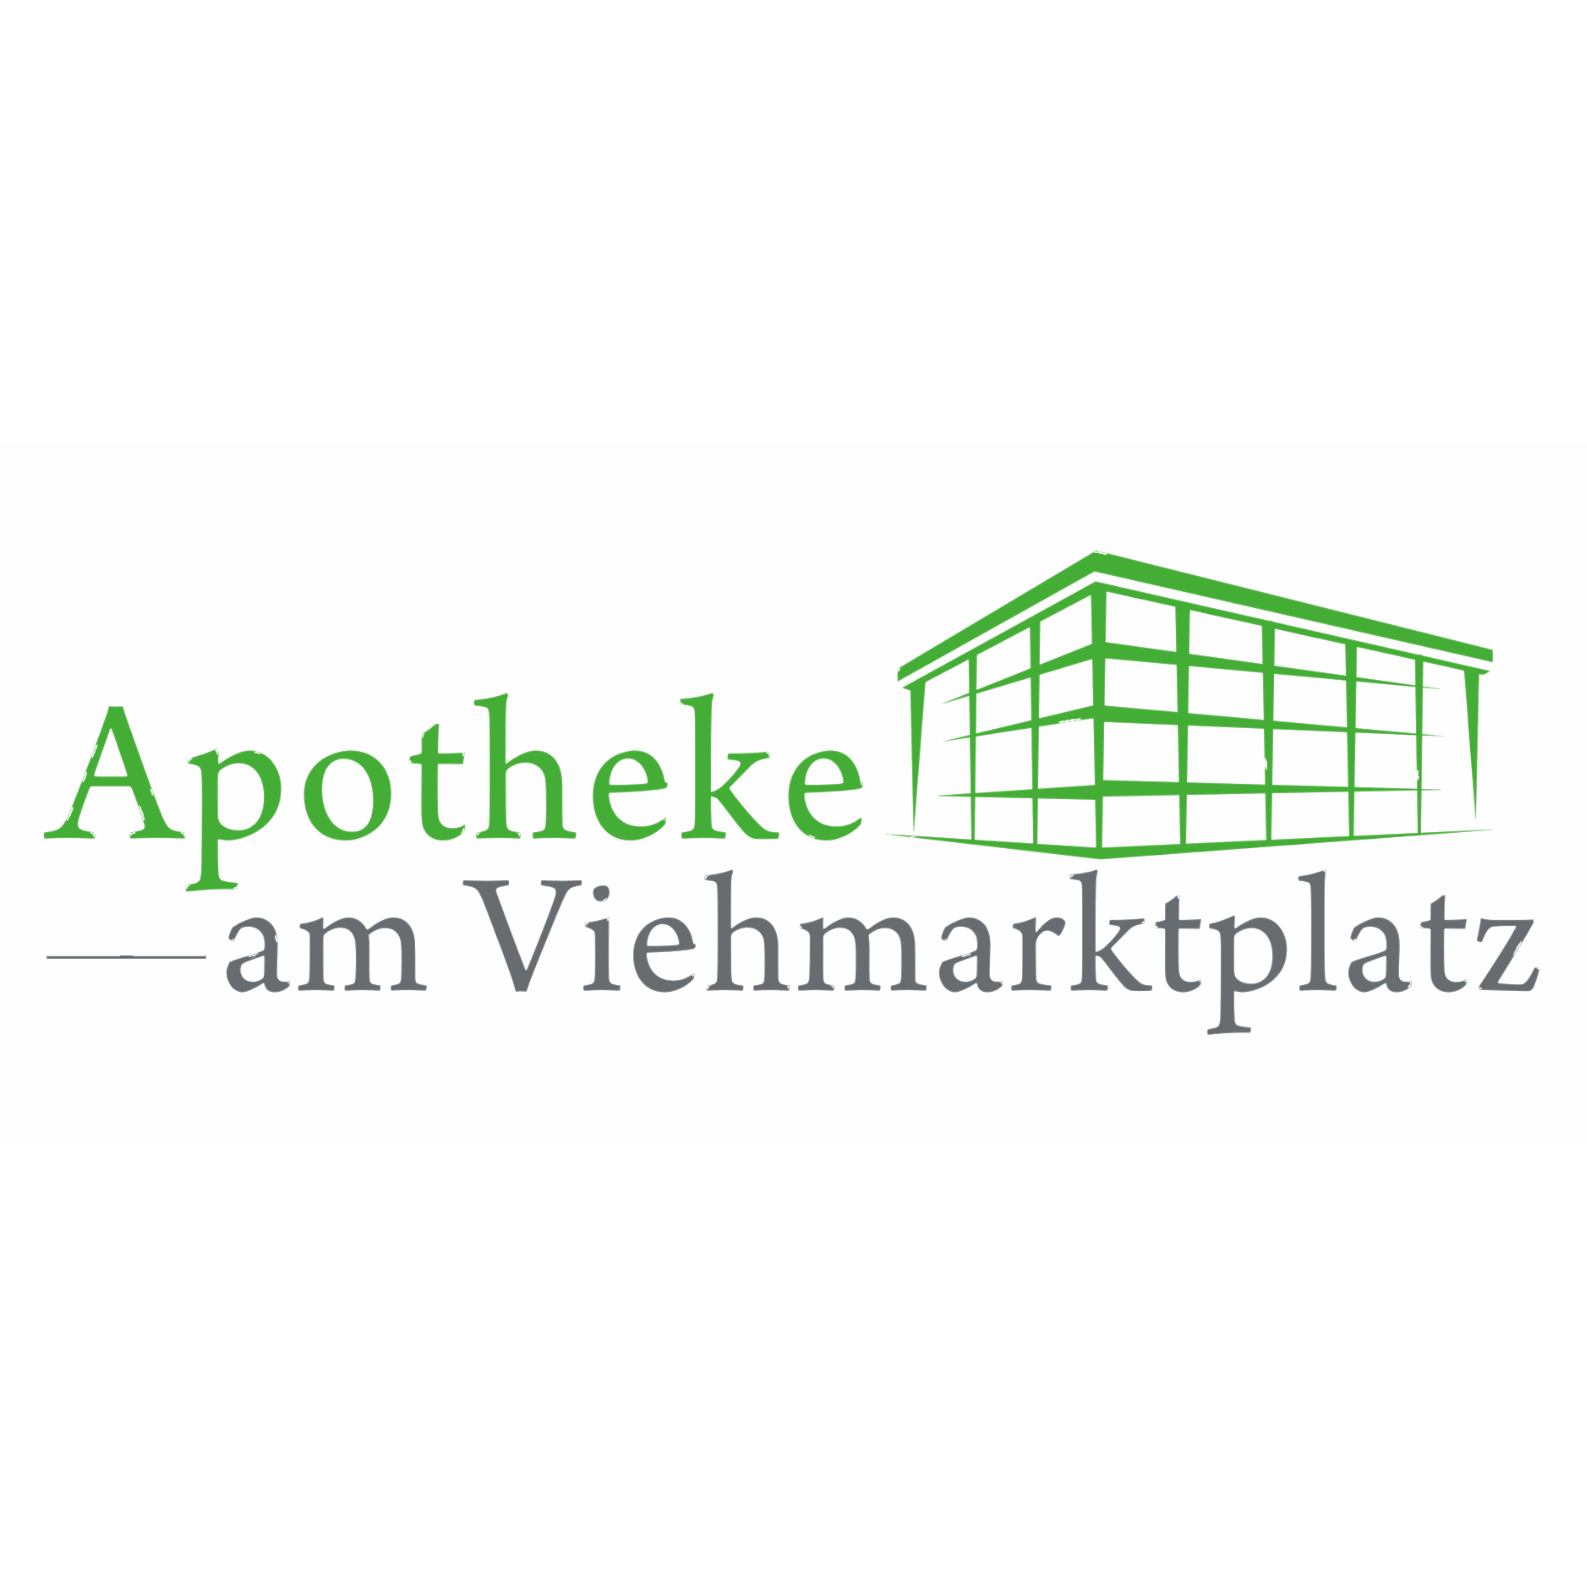 Apotheke am Viehmarktplatz in Trier - Logo